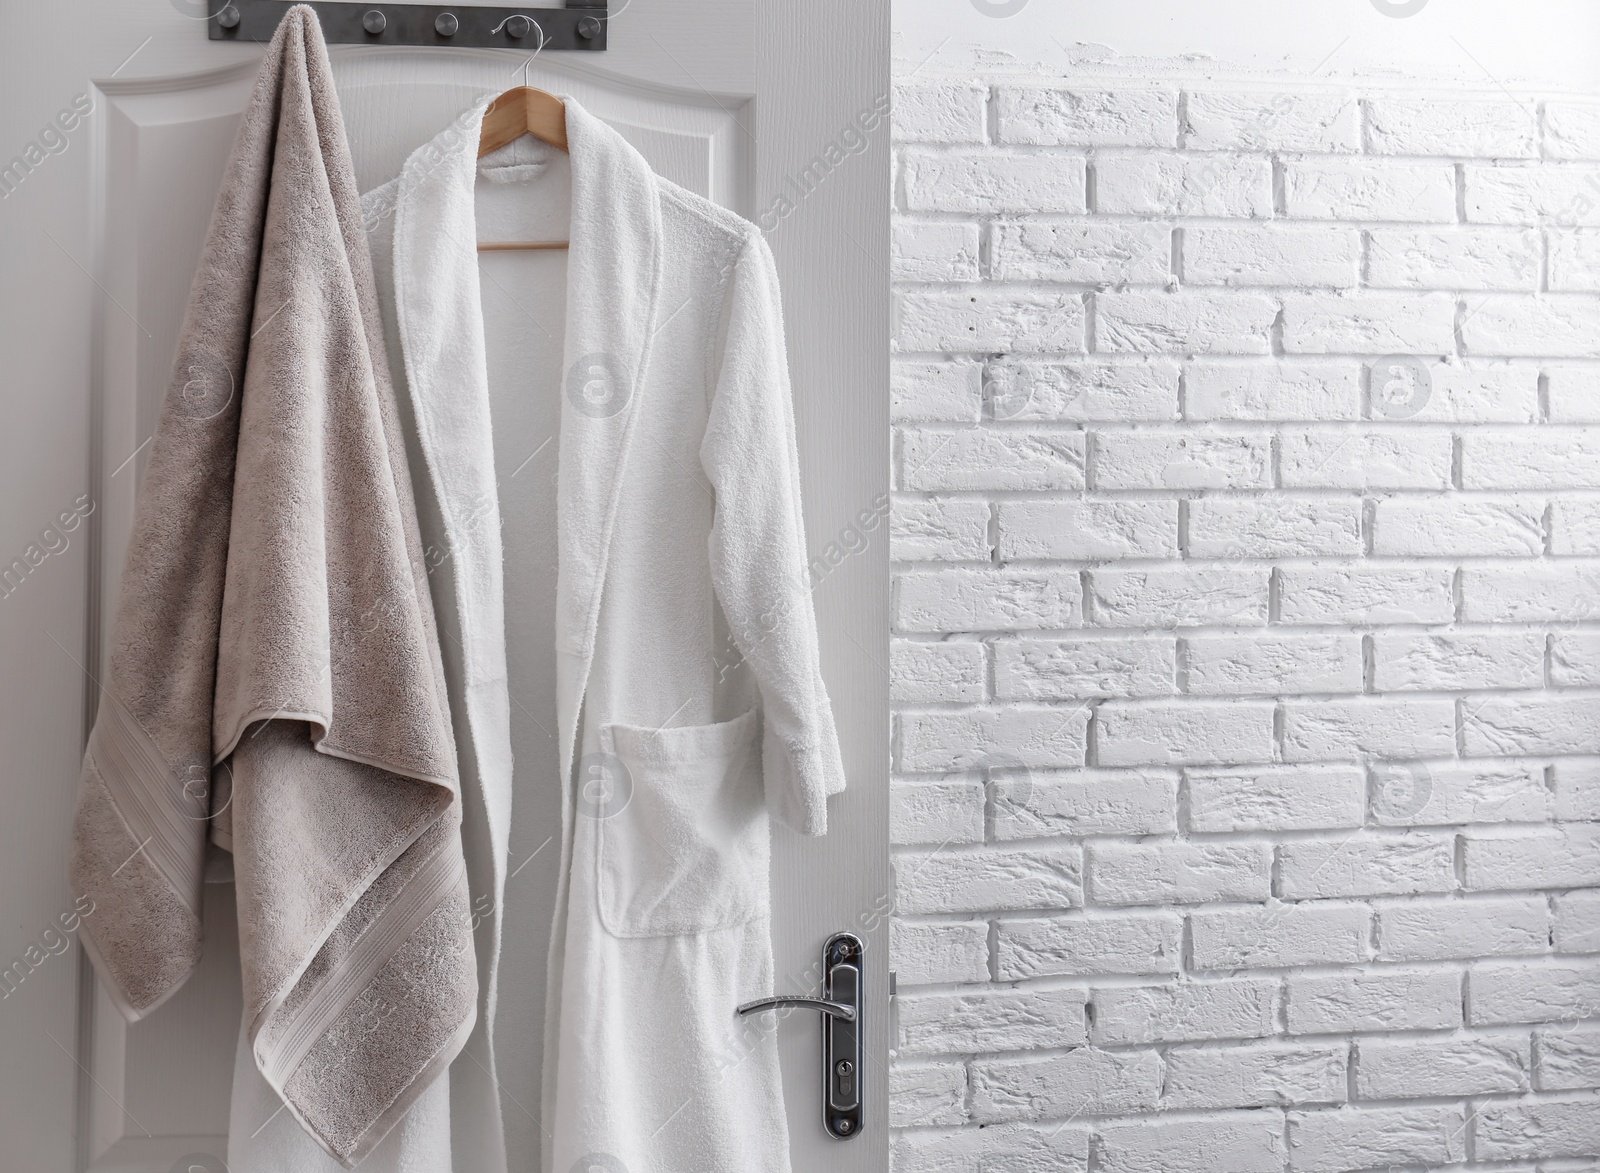 Photo of Hanger with clean towel and bathrobe on door